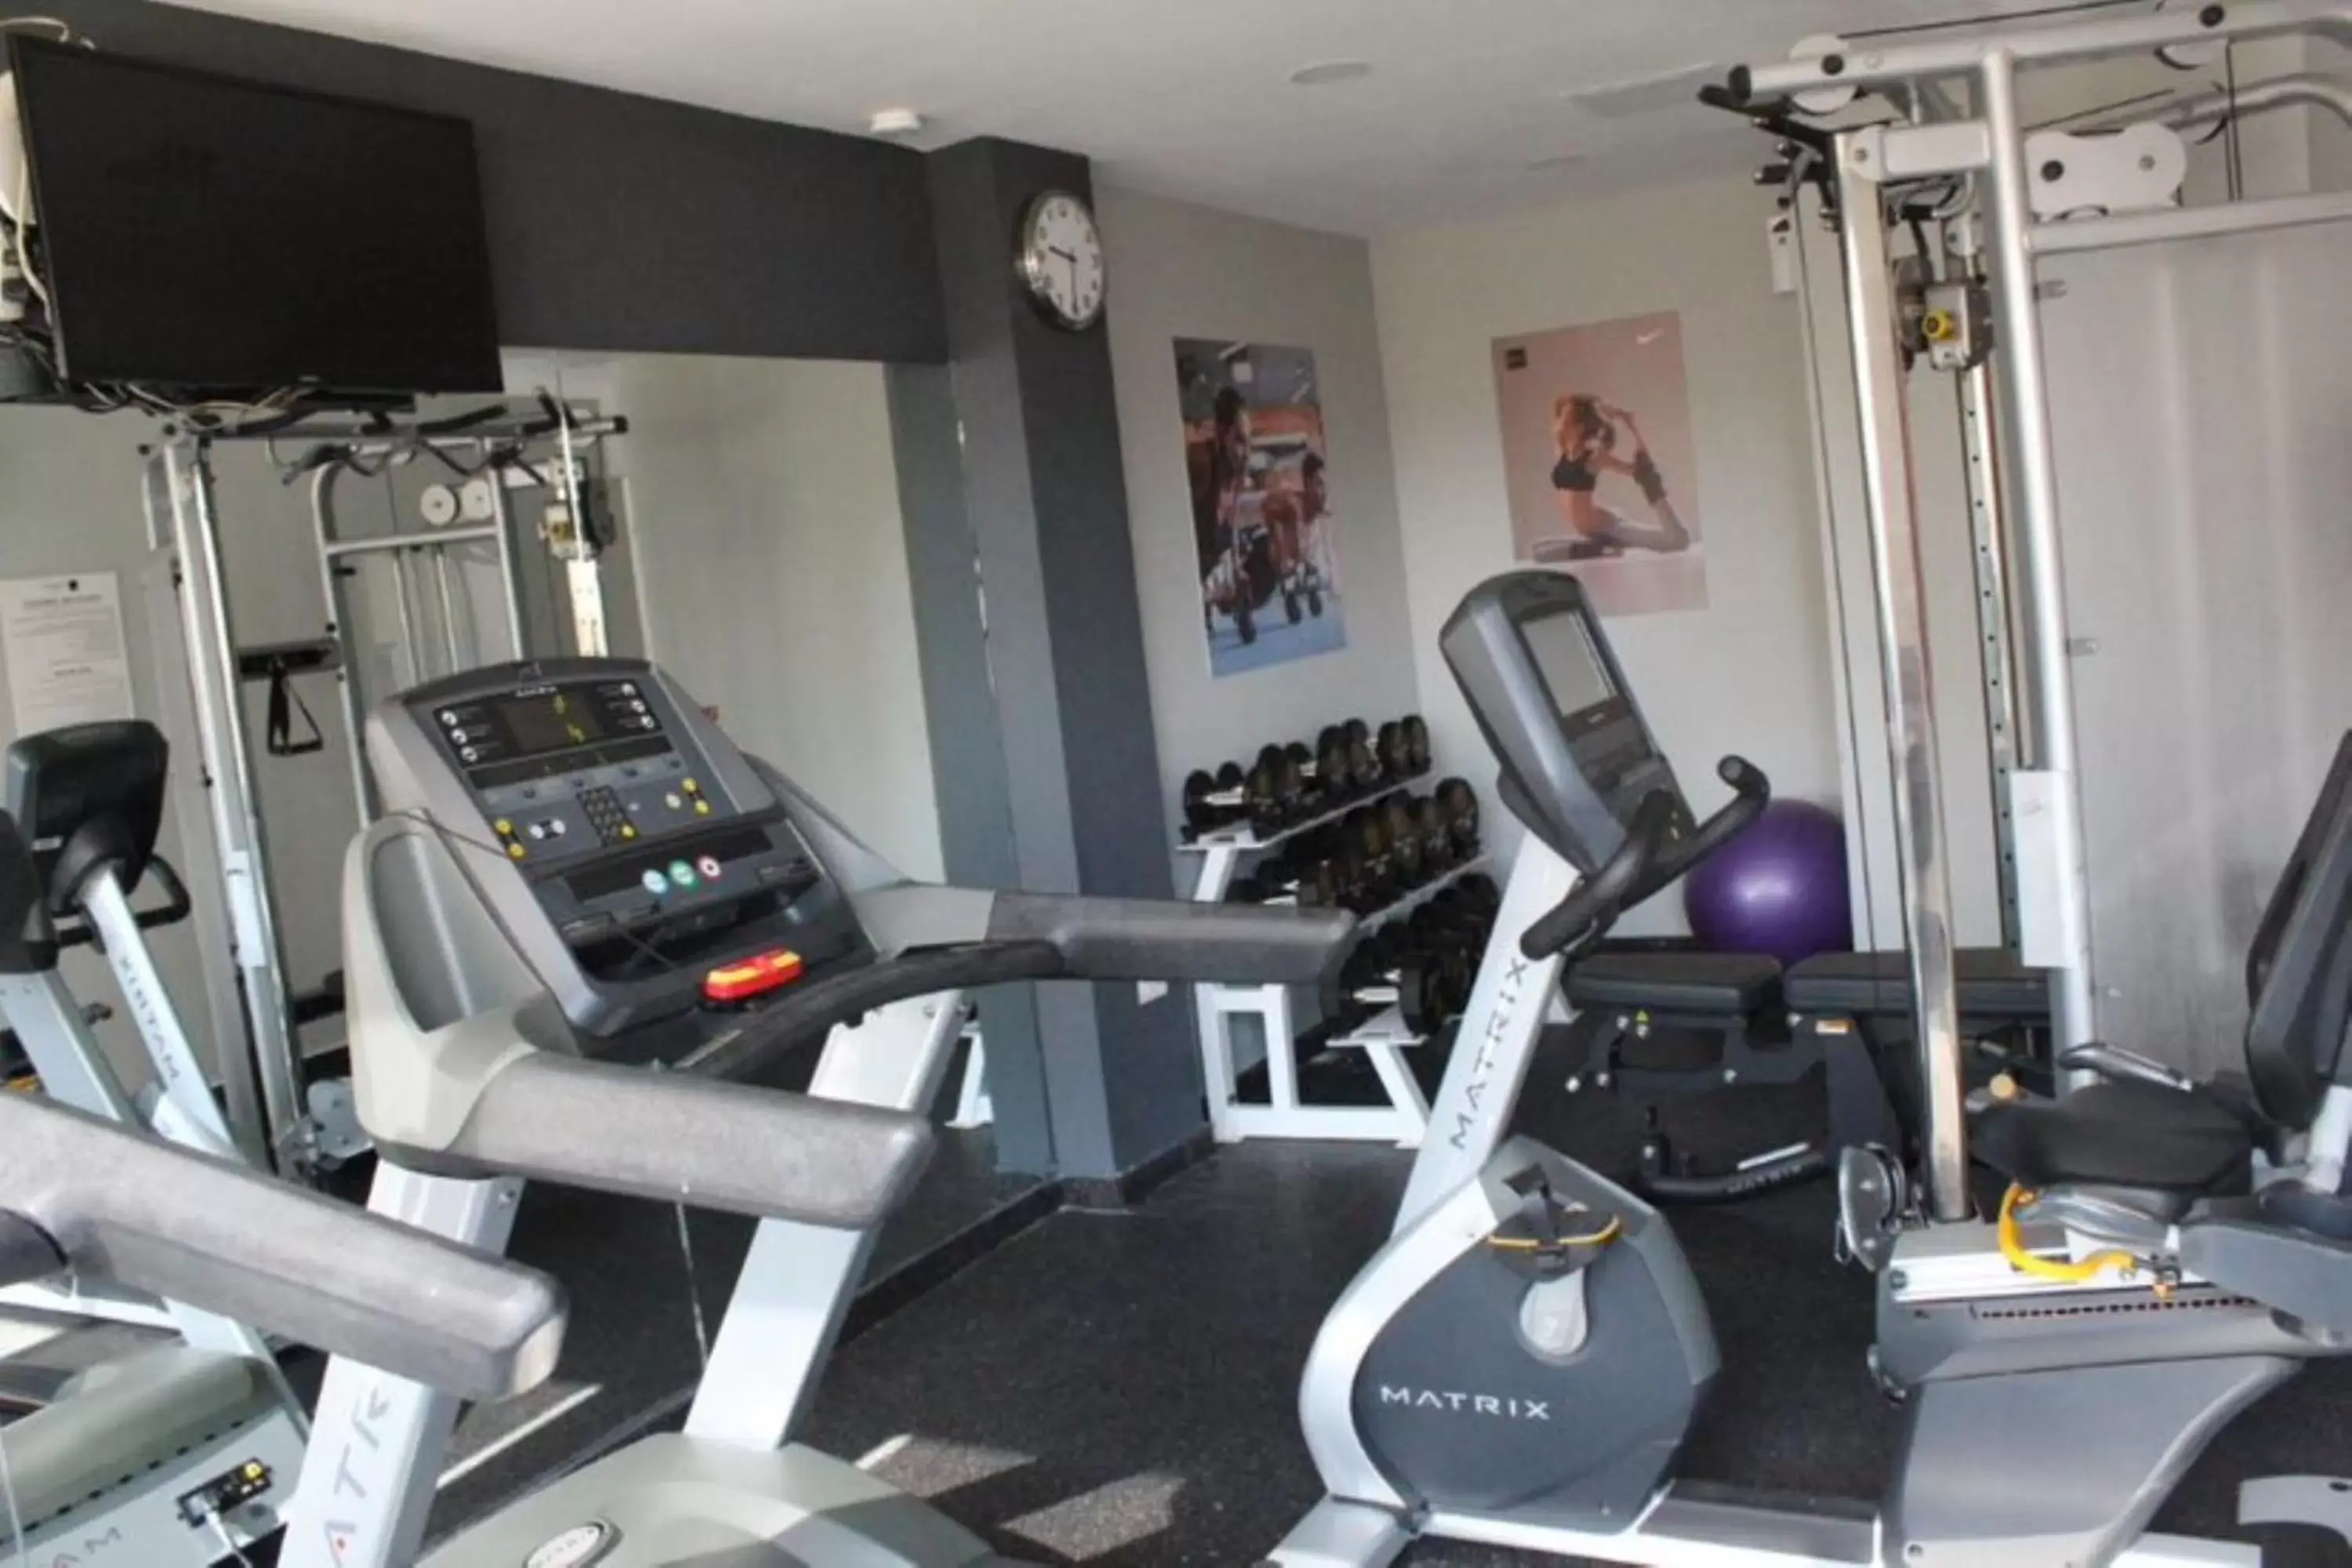 Fitness centre/facilities, Fitness Center/Facilities in Hodelpa Centro Plaza